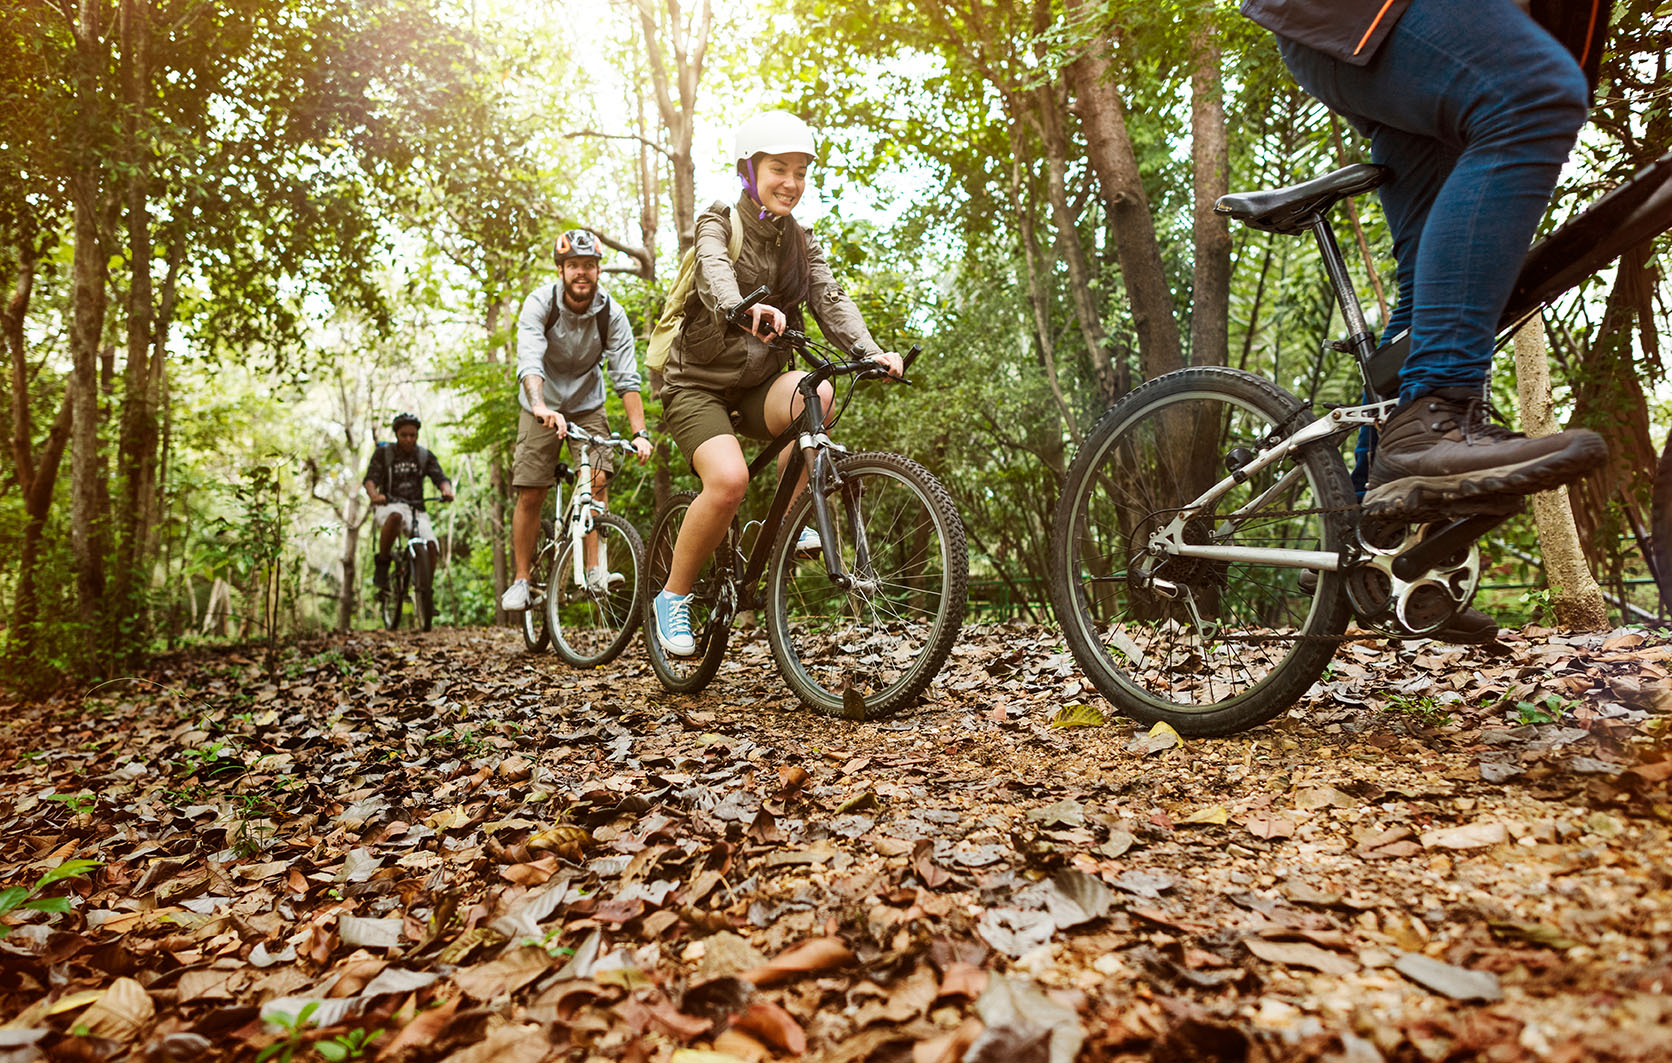 Group biking along a wooded path